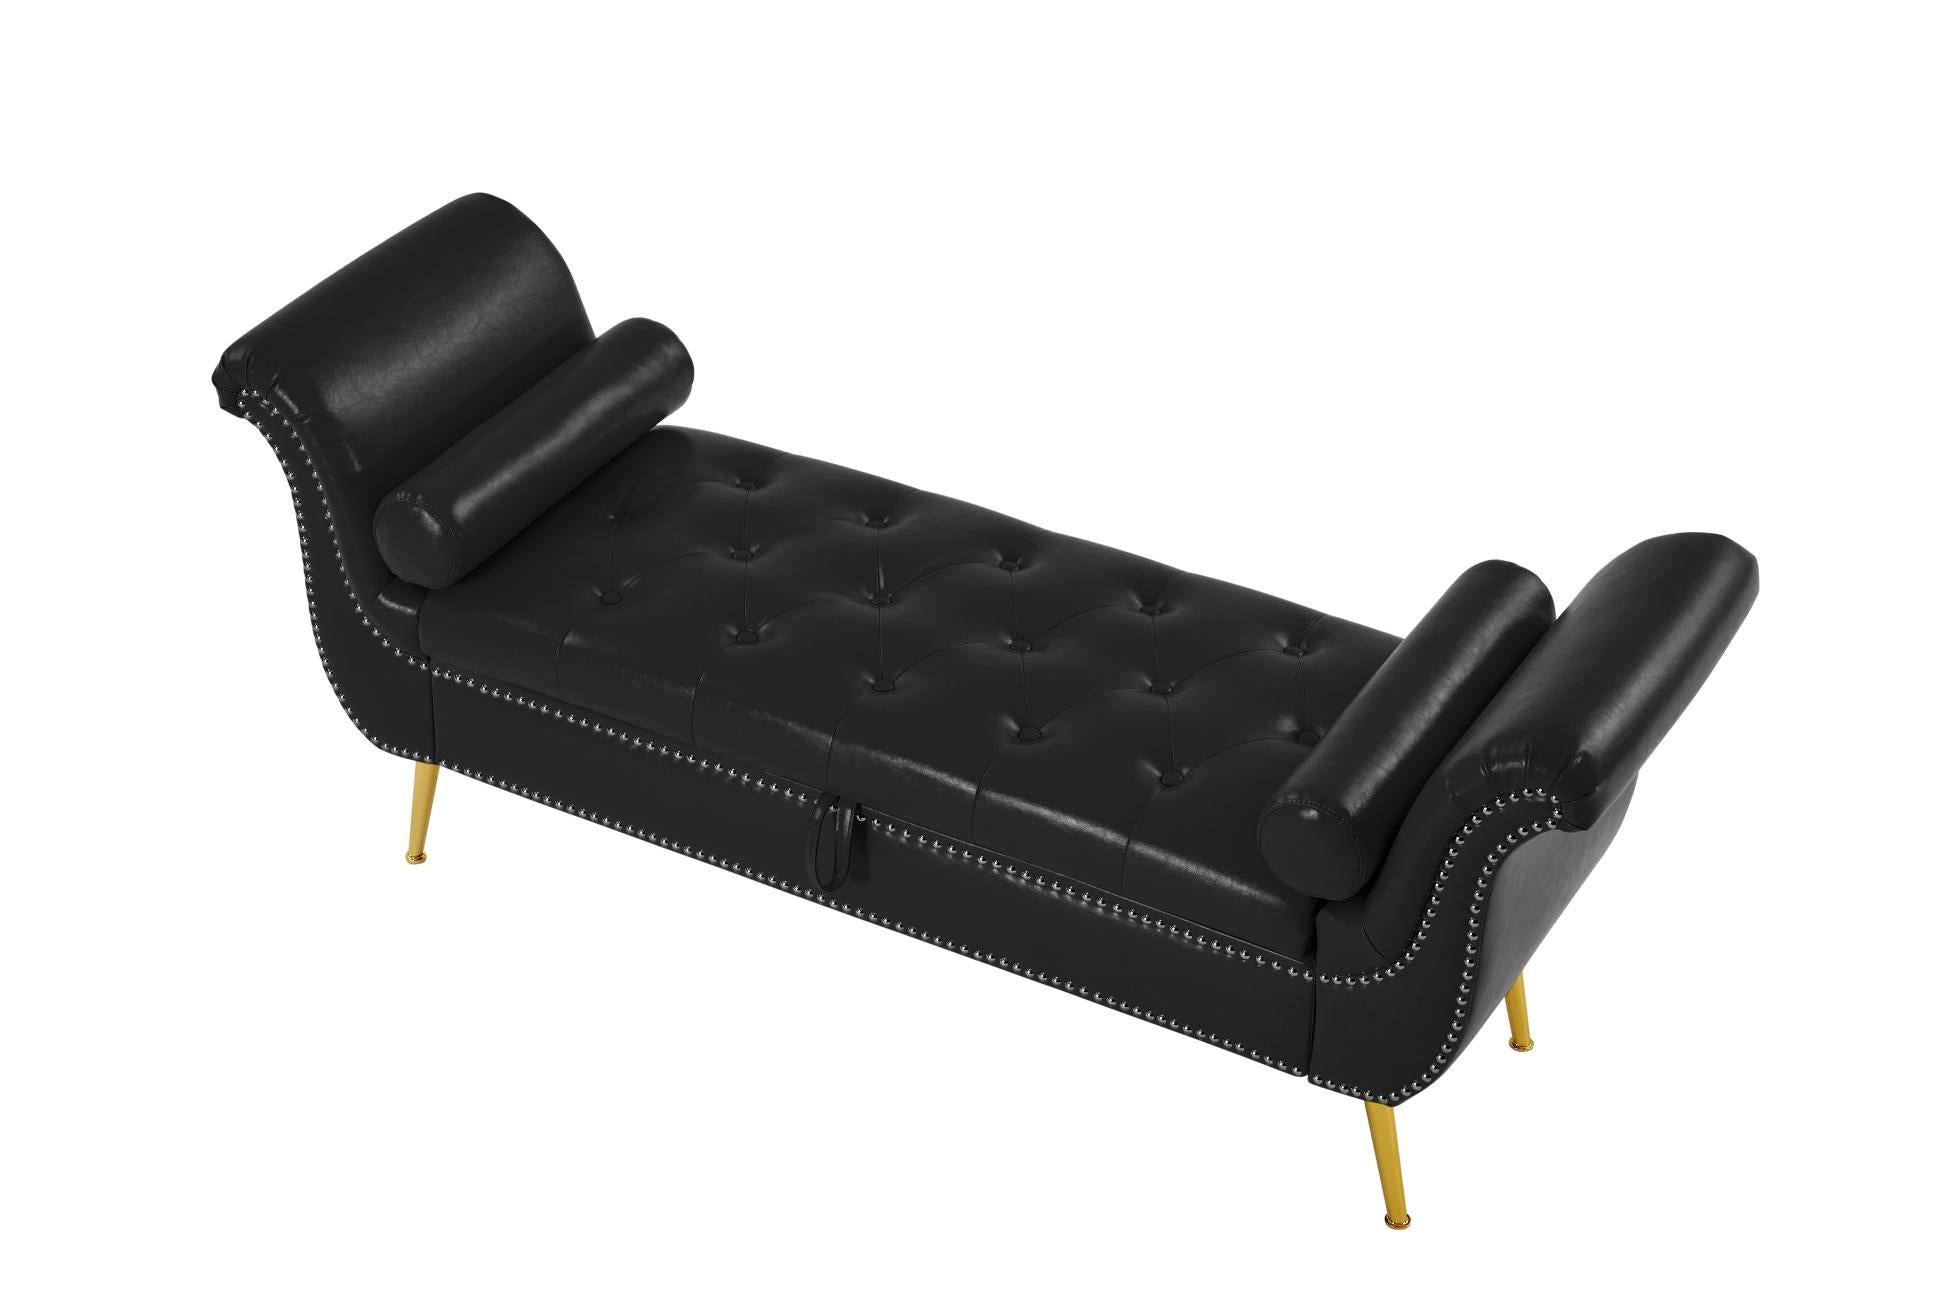 PU Leather, Metal Feet Upholstered Ottoman Bedroom Lounge Ottoman Flip Top Storage Sofa Bench